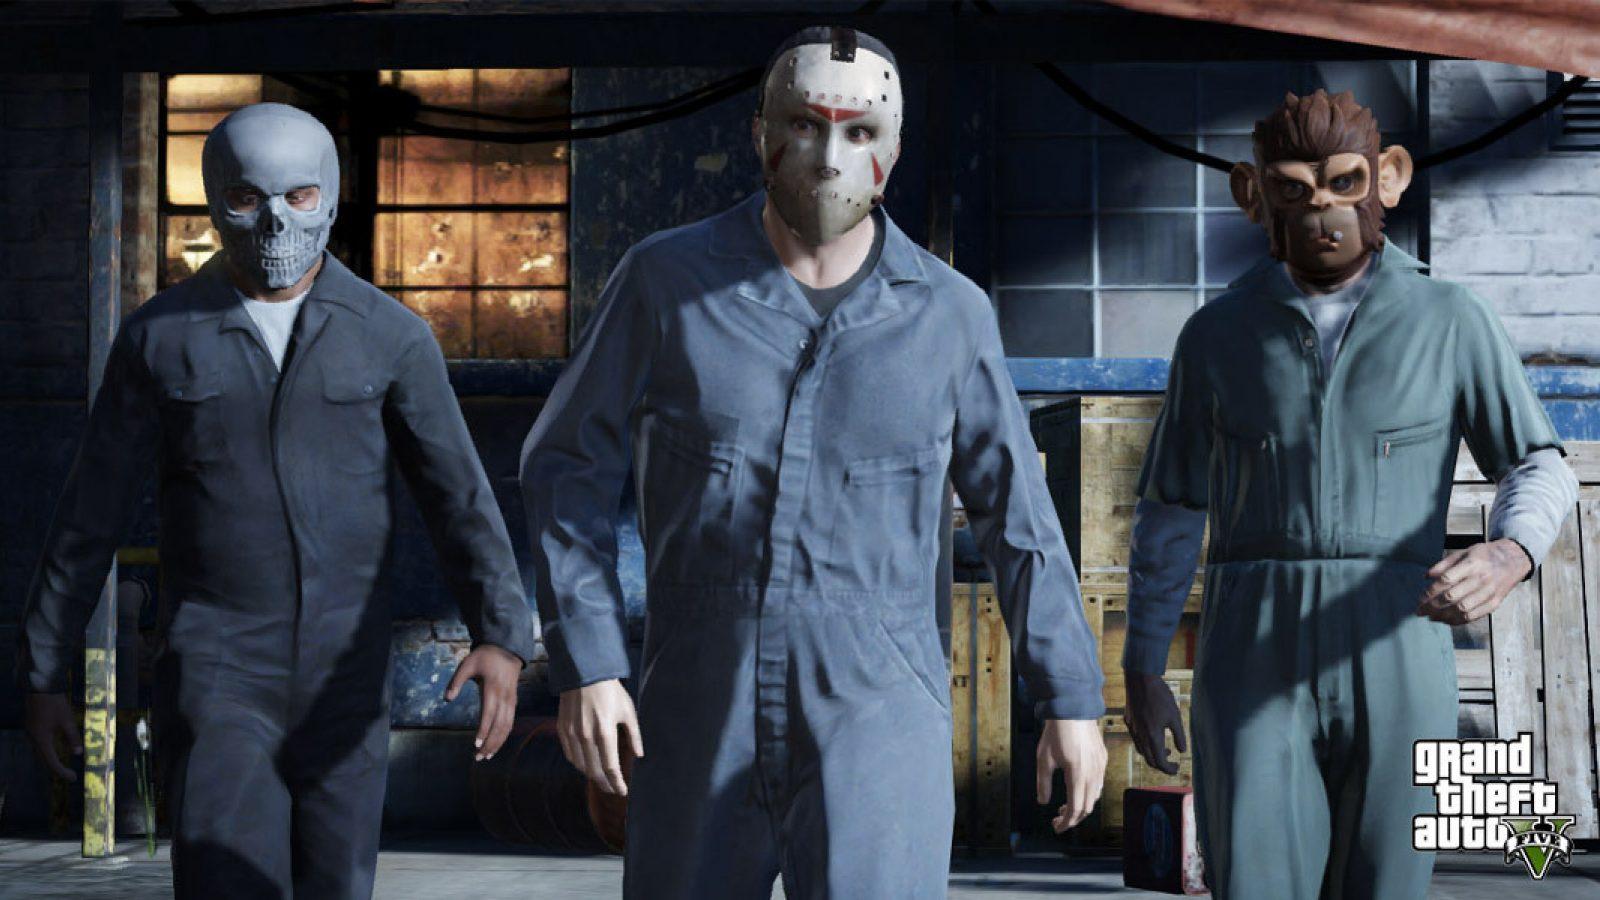 Rockstar Finally Says Outright Why 'GTA 5' Never Got Single-Player DLC